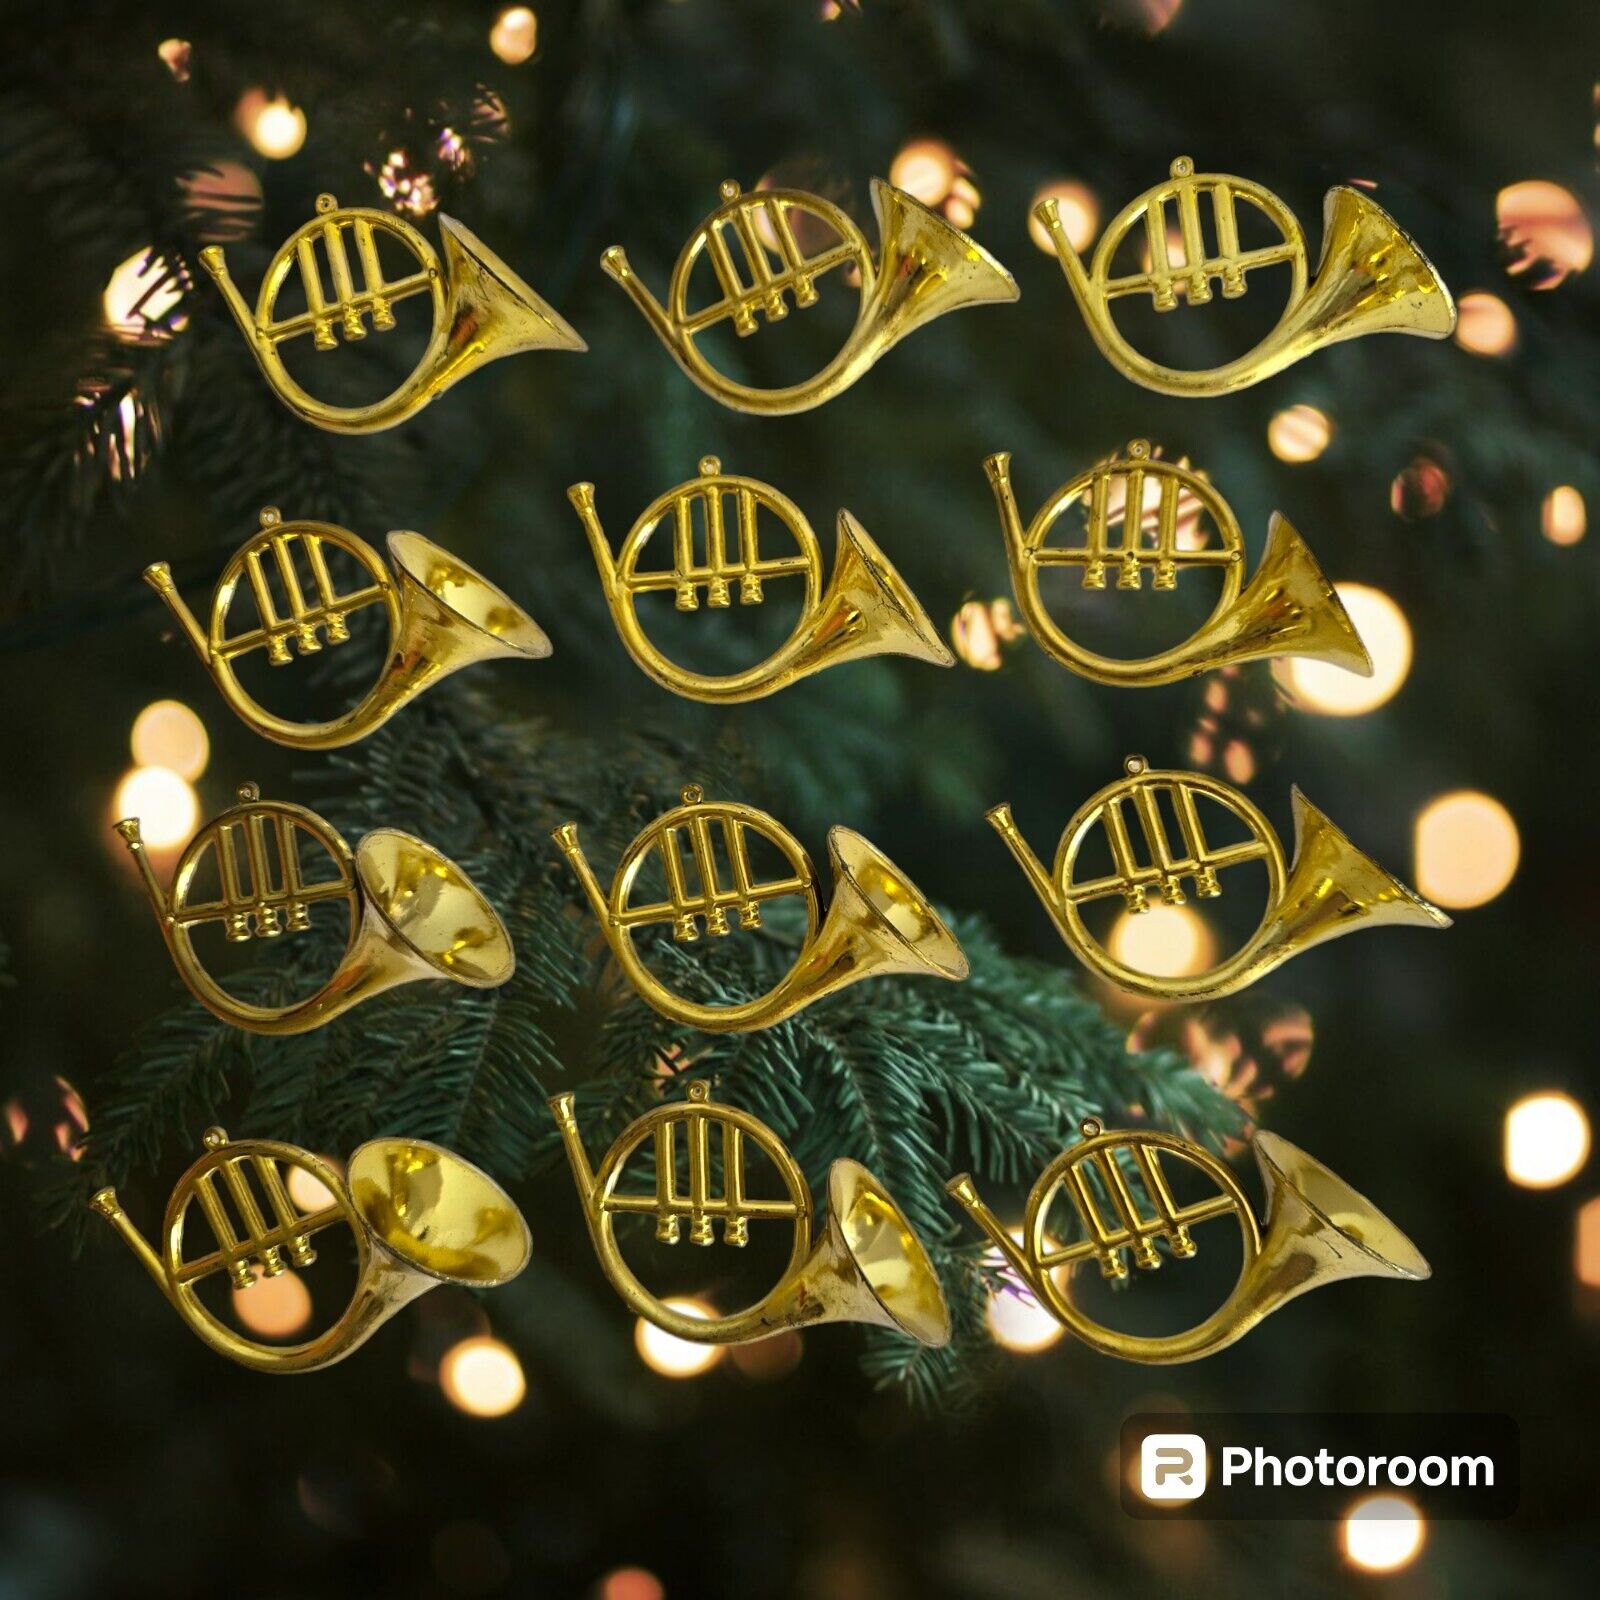 (12) Plastic Metallic Gold Tone French Horn Christmas Ornament Wreath Craft